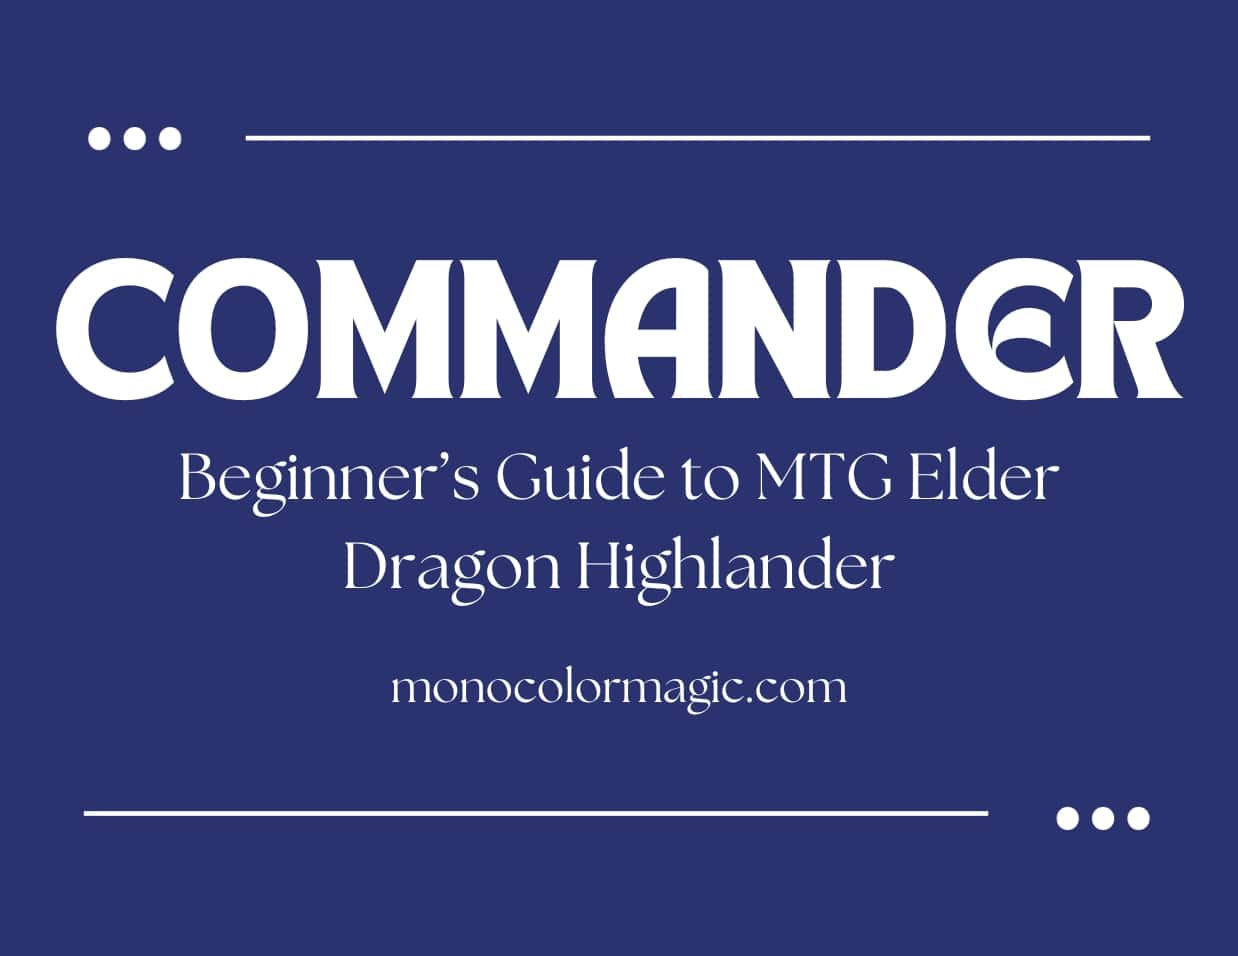 Commander beginner's guide to mtg elder dragon highlander